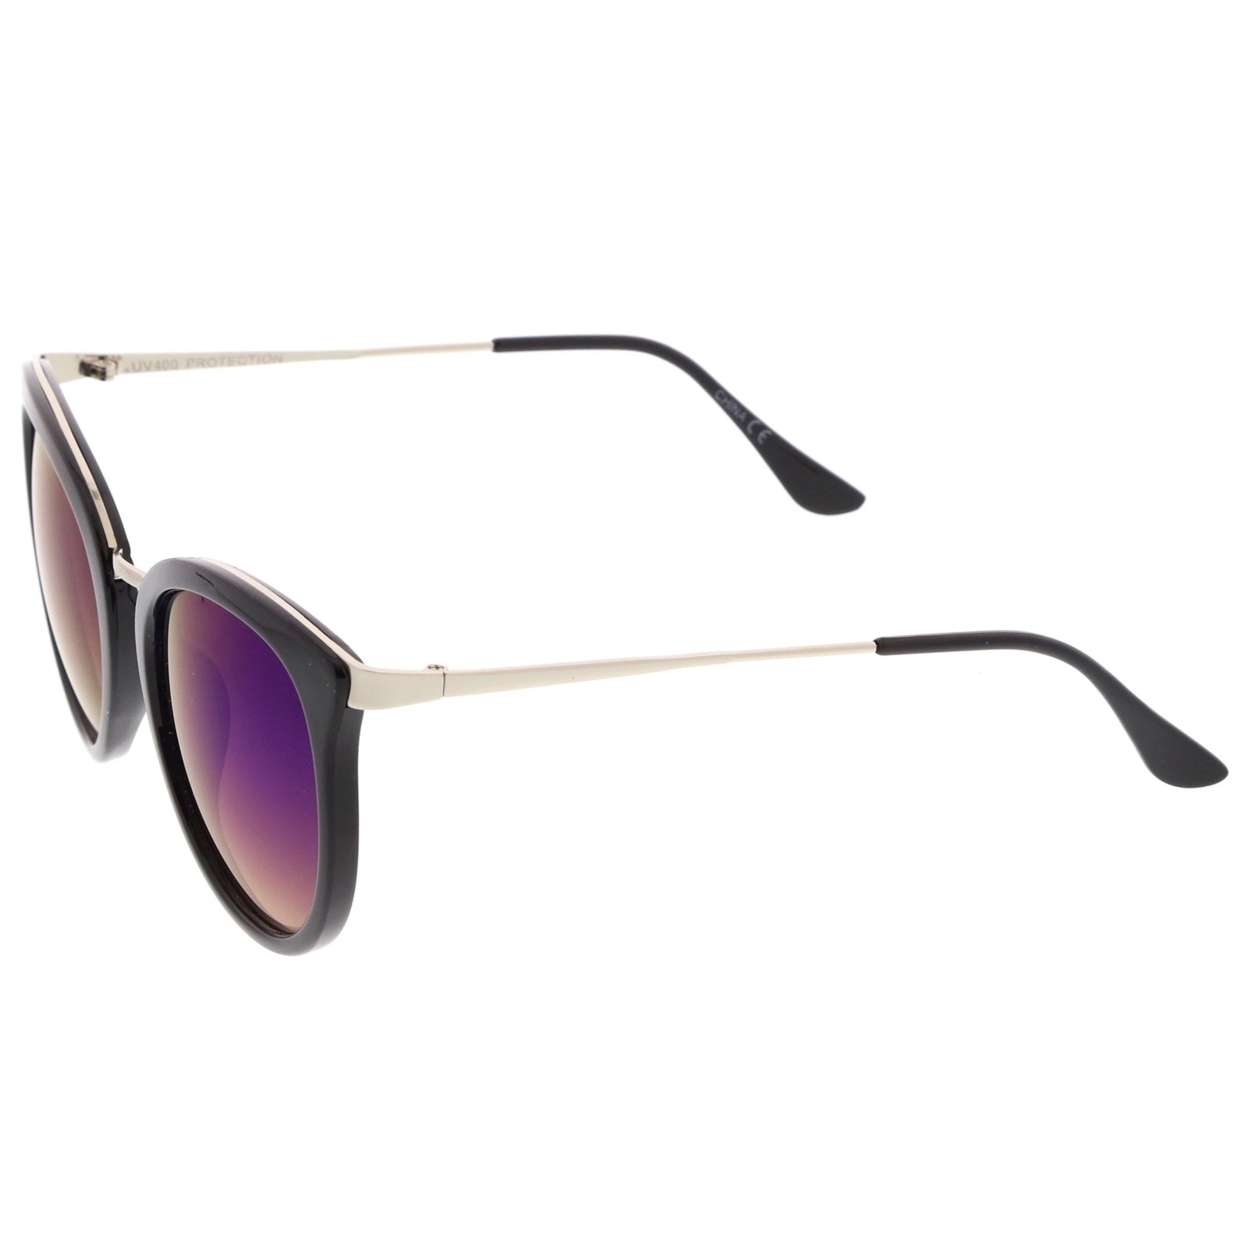 Modern Slim Metal Temple Colored Mirror Lens Cat Eye Sunglasses 54mm - Black-Gold / Gold Mirror